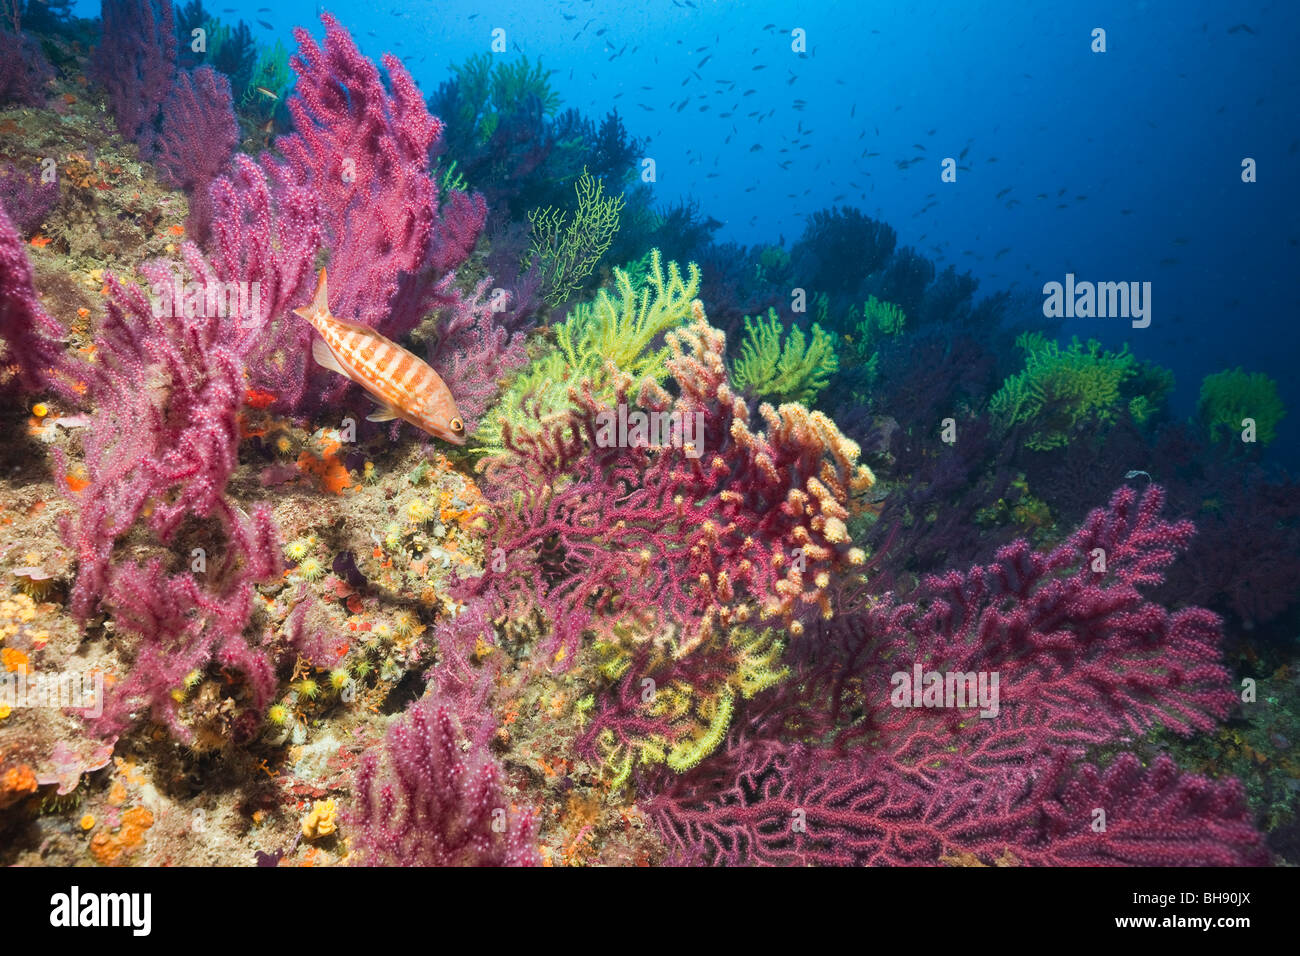 Colorful Reef with Gorgonians, Paramuricea clavata, Carall Bernat, Medes Islands, Costa Brava, Mediterranean Sea, Spain Stock Photo